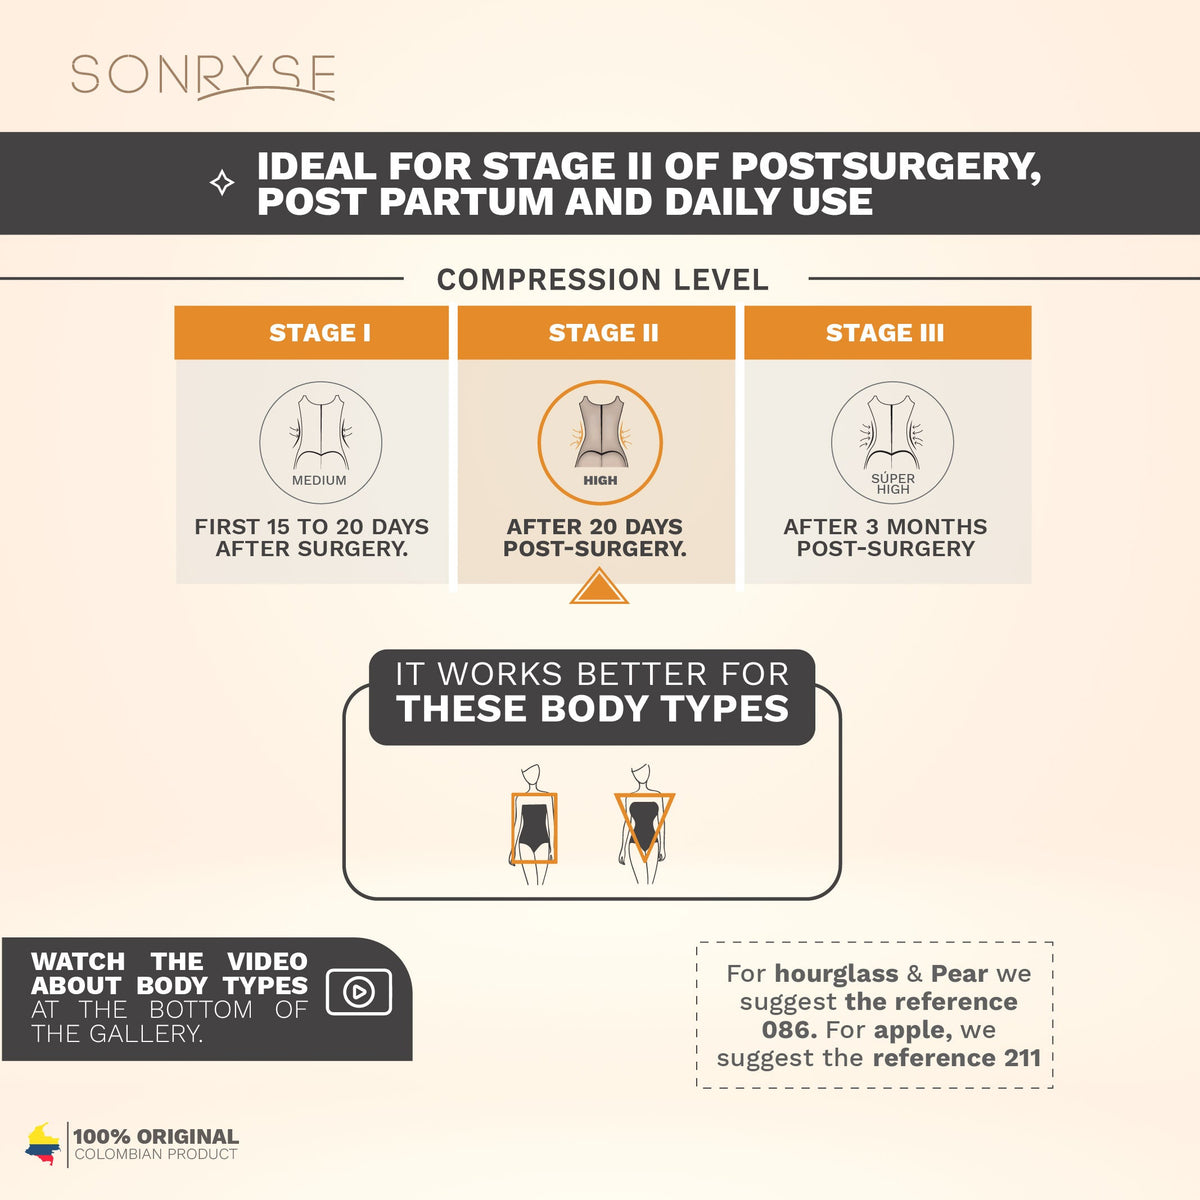 Sonryse 066 Butt Lifting Effect & Tummy Control | Powernet